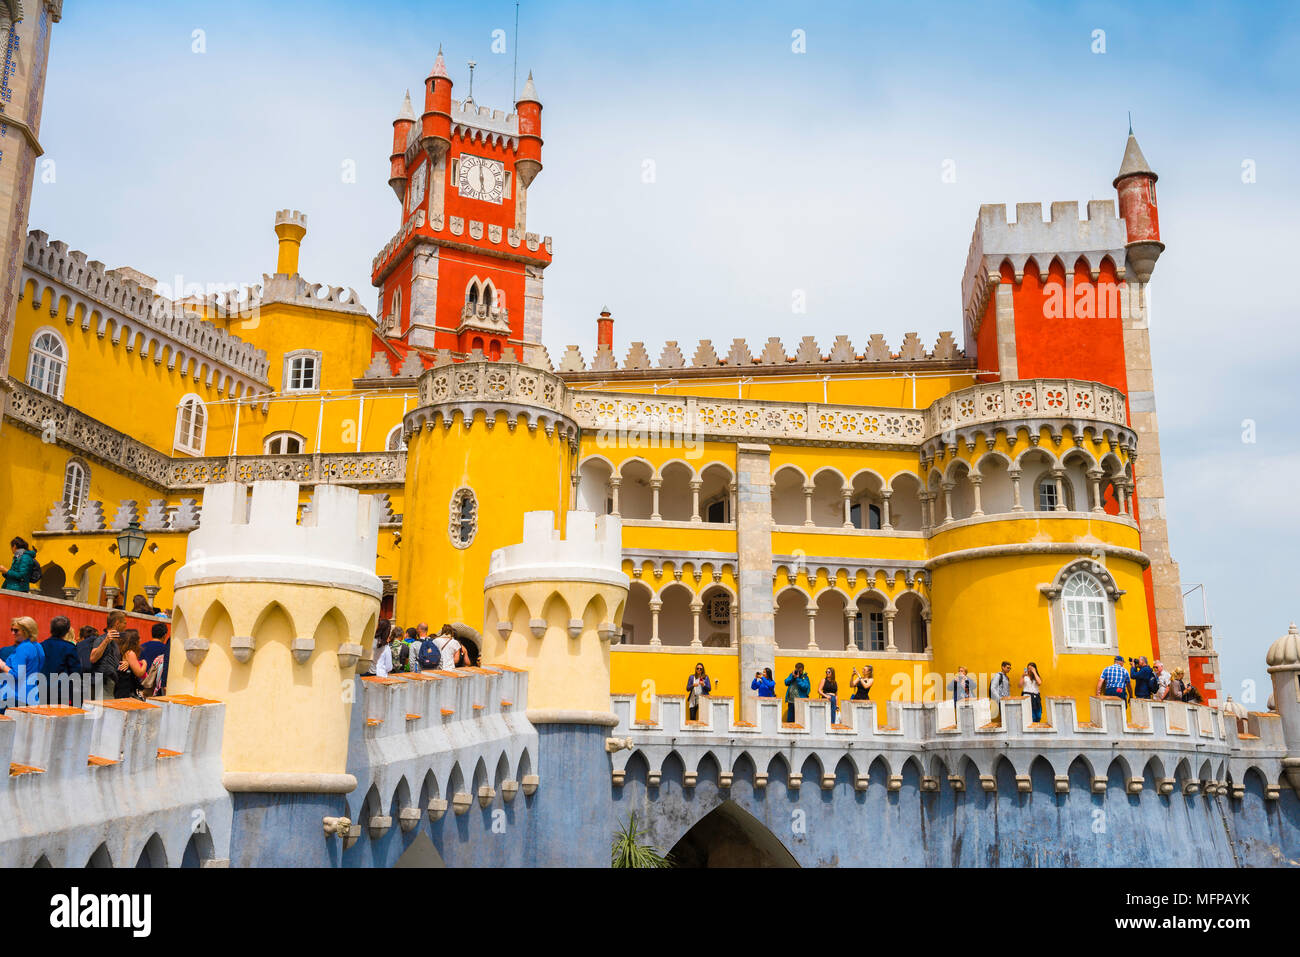 https://c8.alamy.com/comp/MFPAYK/sintra-palacio-da-pena-view-of-the-colorful-landmark-palace-the-palacio-da-pena-sited-on-a-hill-to-the-south-of-sintra-portugal-MFPAYK.jpg